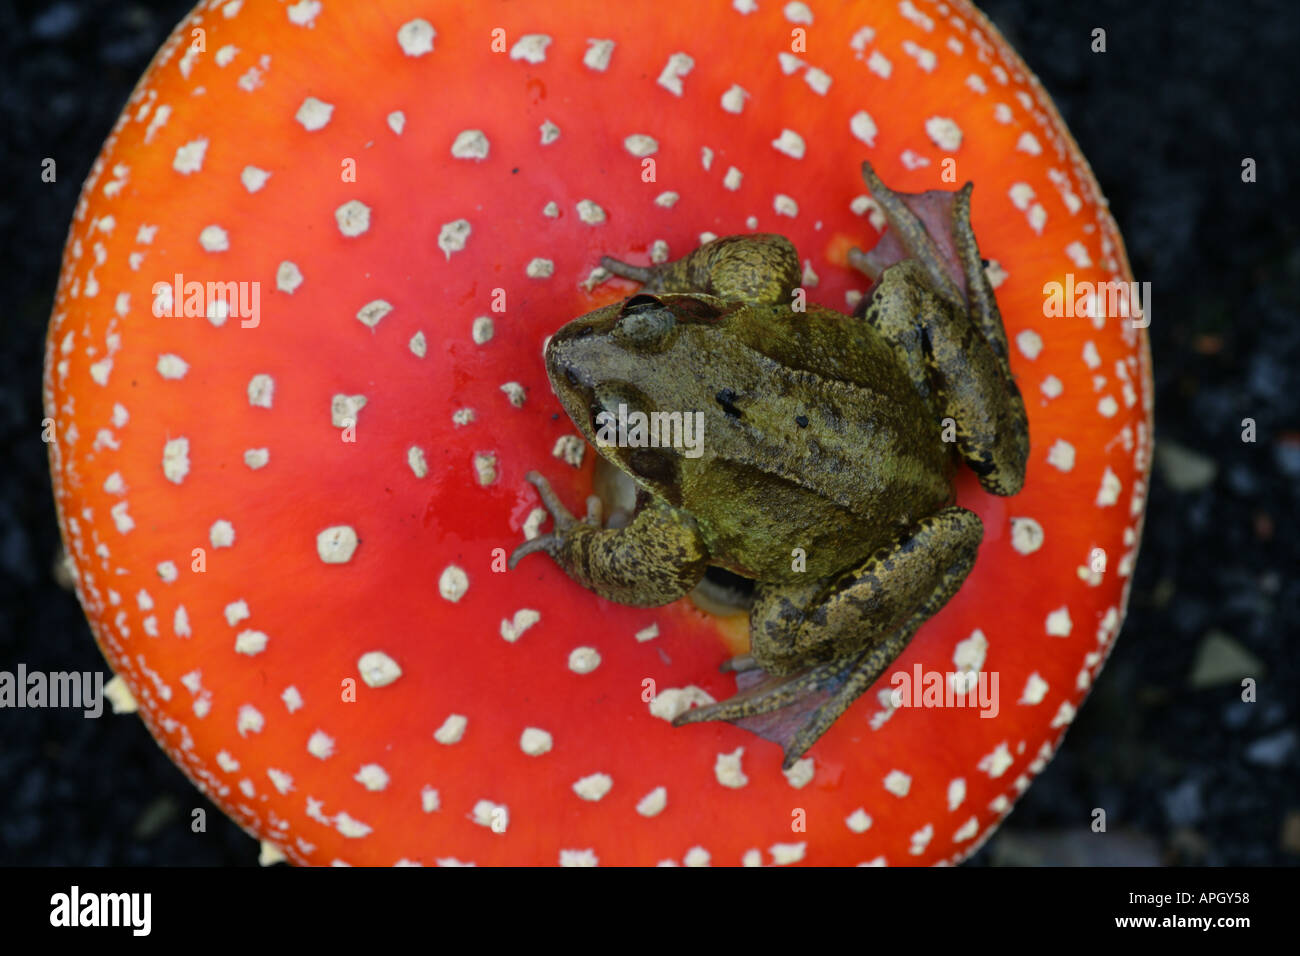 GEMEINSAMEN Frosch Rana Temporaria auf Fliegenpilz-Pilze Stockfoto